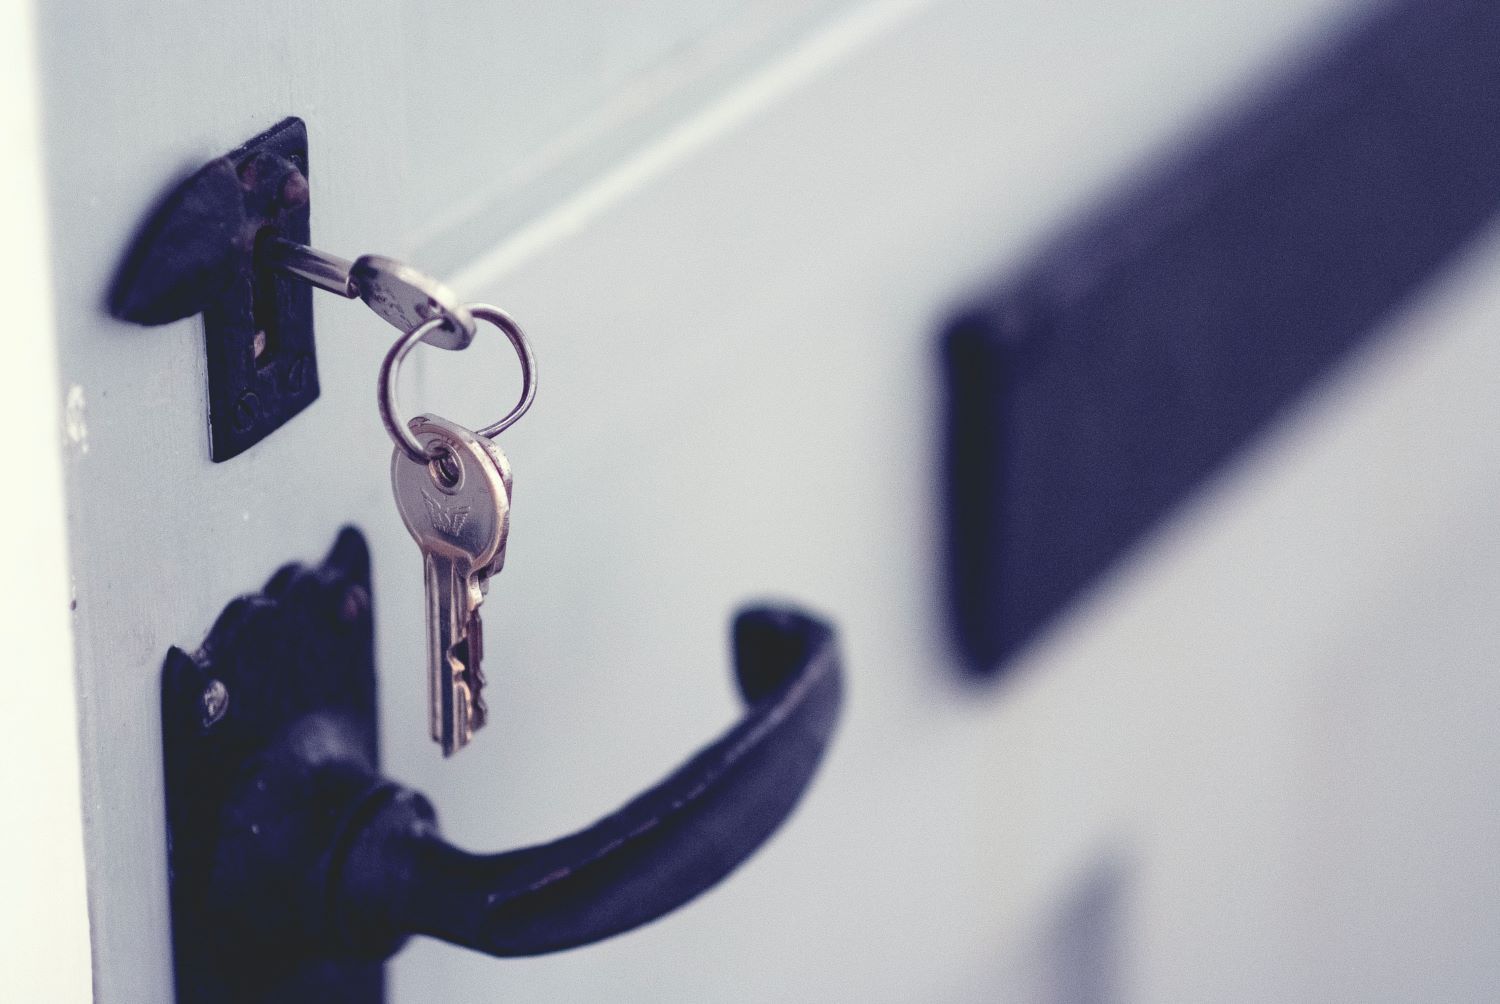 Key attach on the door knob